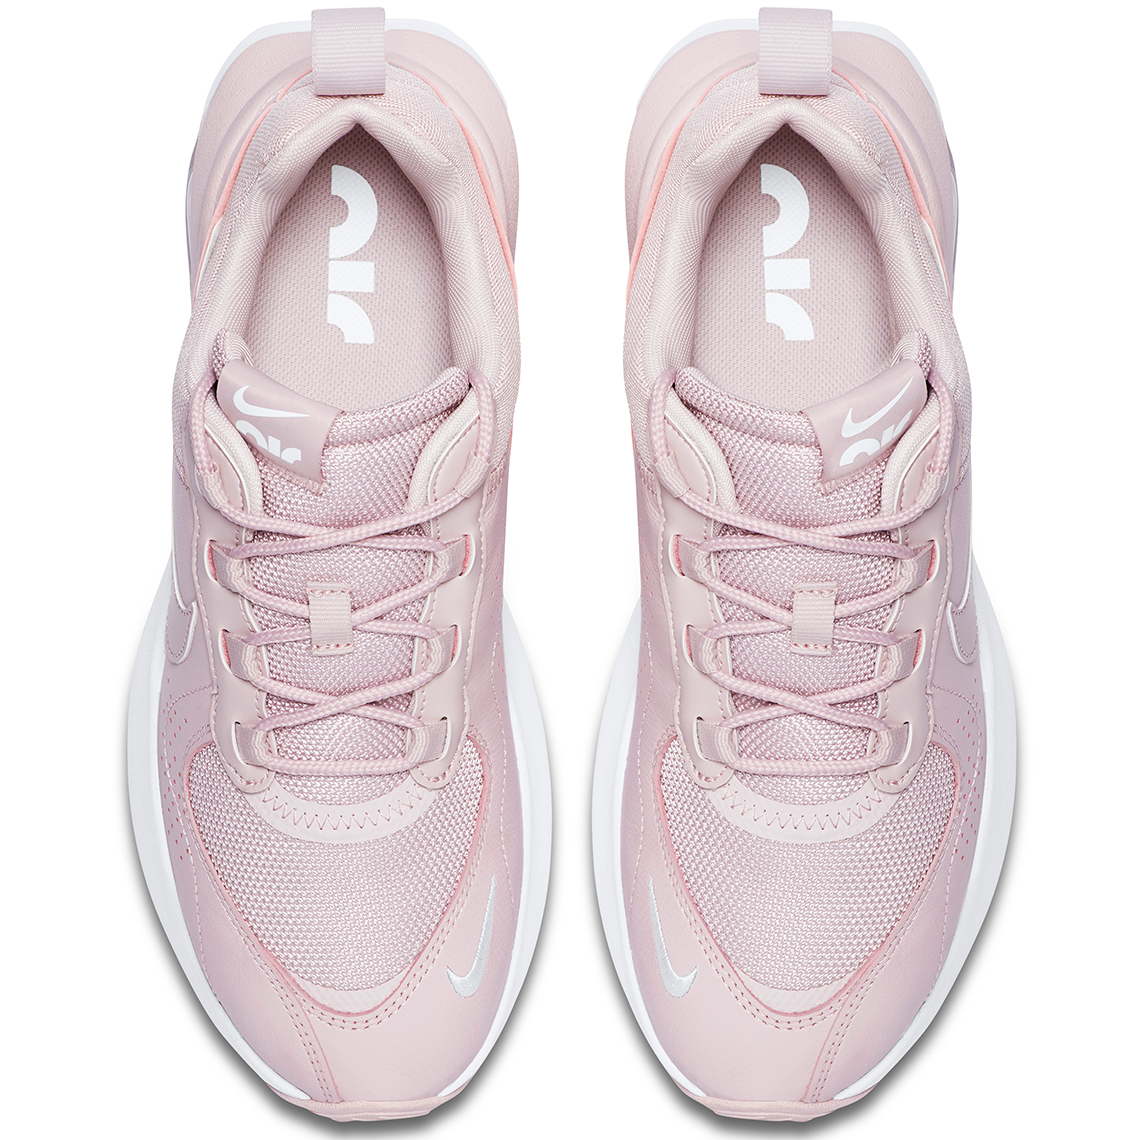 Nike Air Max Verona Spring 2020 Release Date | SneakerNews.com